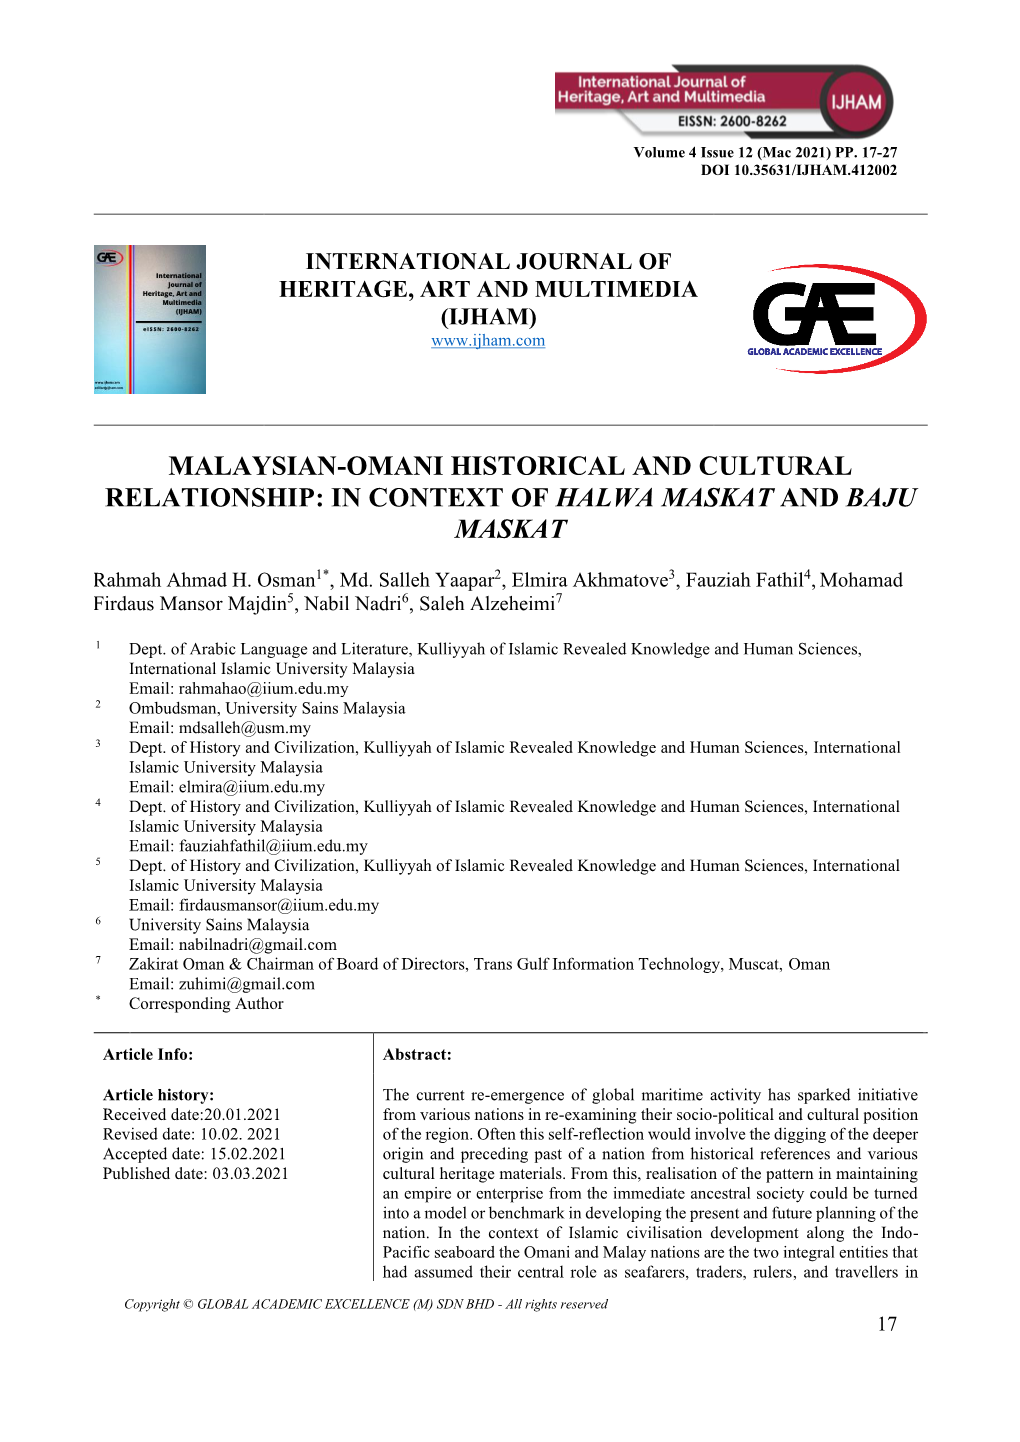 Malaysian-Omani Historical and Cultural Relationship: in Context of Halwa Maskat and Baju Maskat